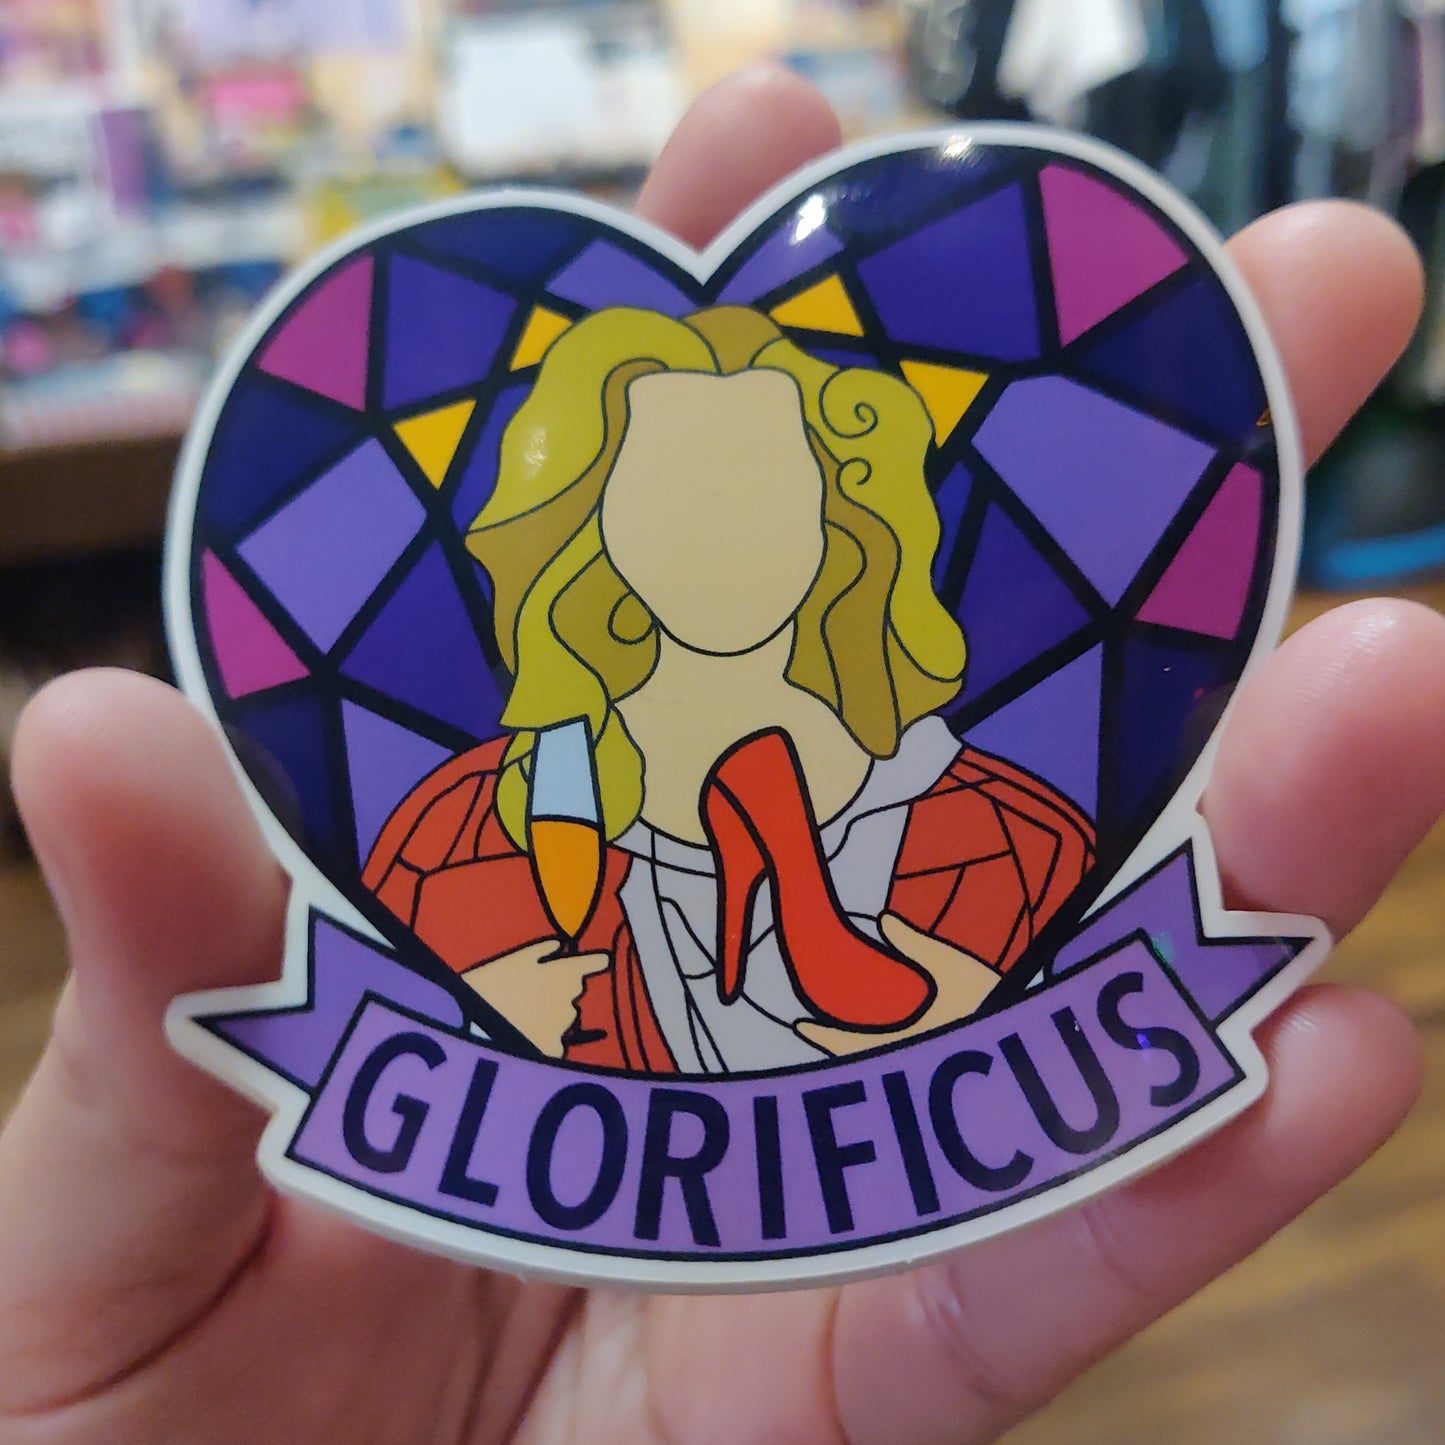 Glorificus STICKER by Slayerfest 98